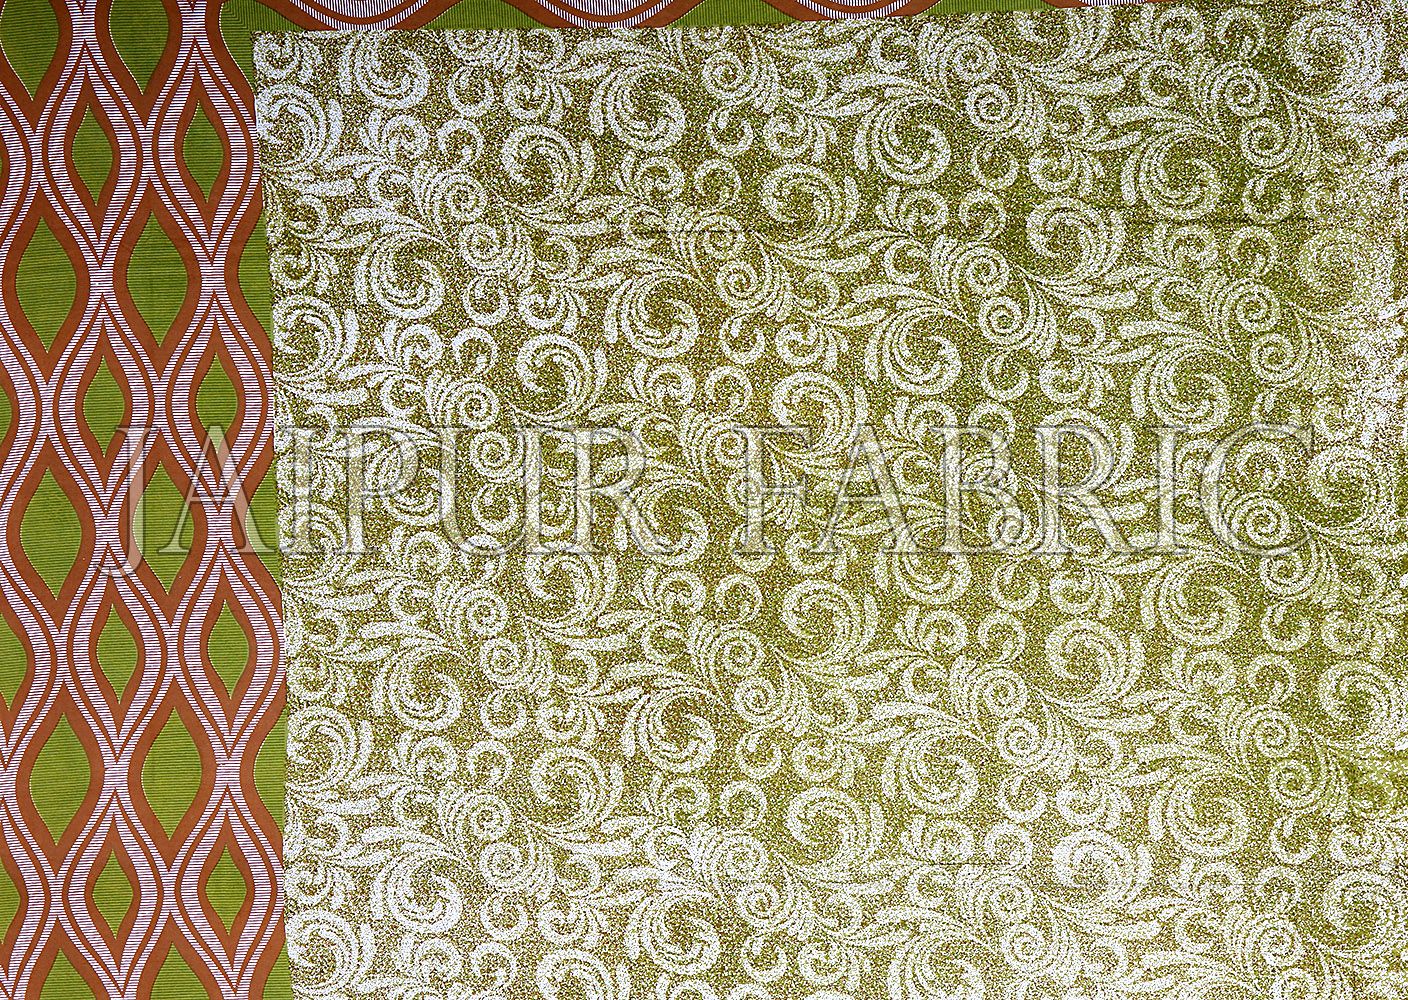 Green Border Retro Pattern Screen Print Cotton Double Bed Sheet